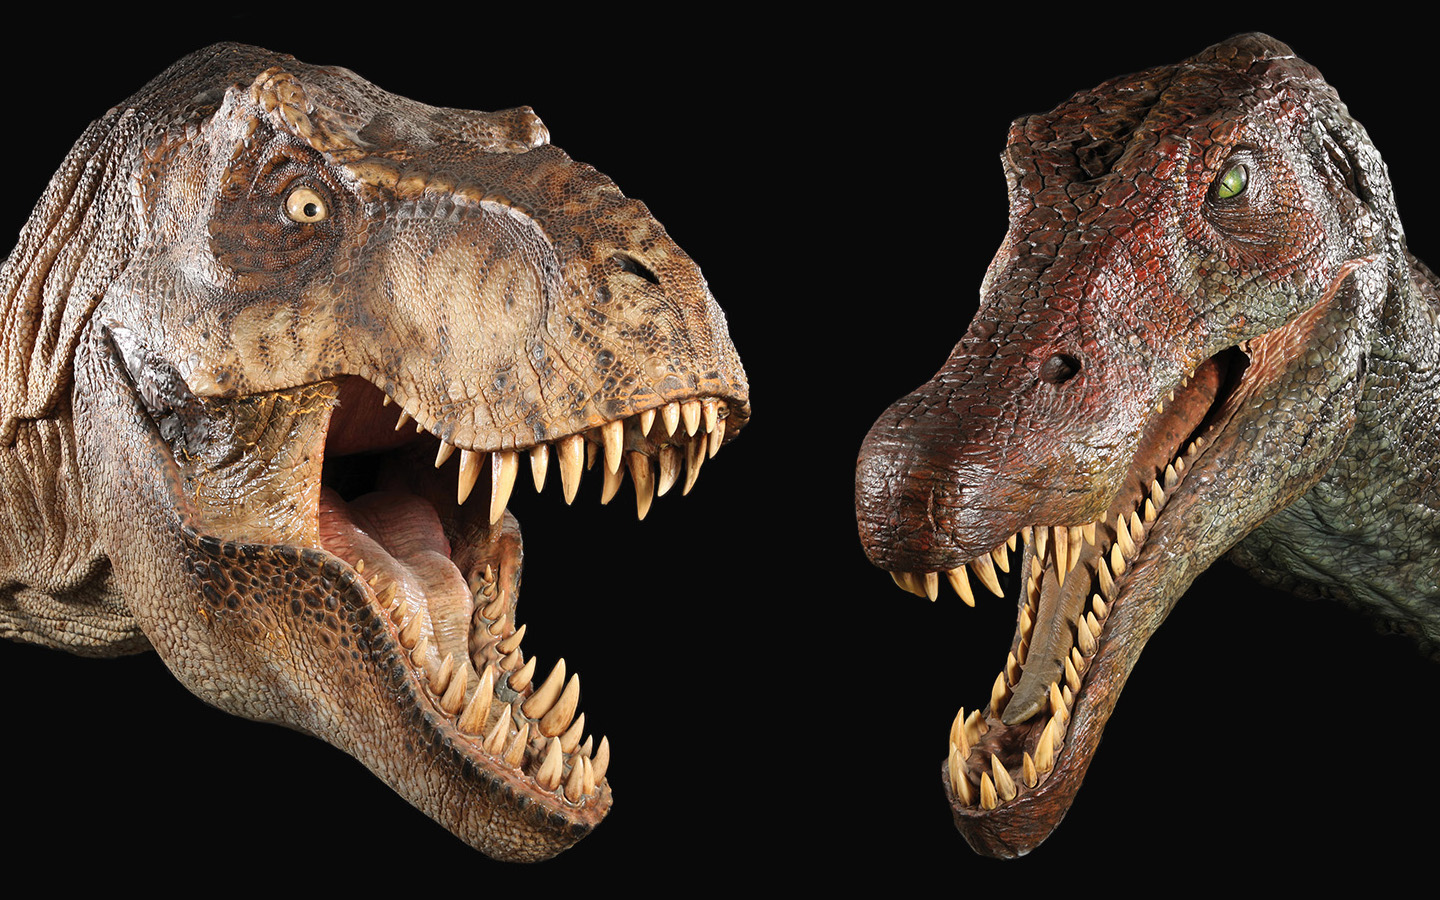 267515 descargar imagen dinosaurios, animales, tirano saurio rex, extinguido: fondos de pantalla y protectores de pantalla gratis